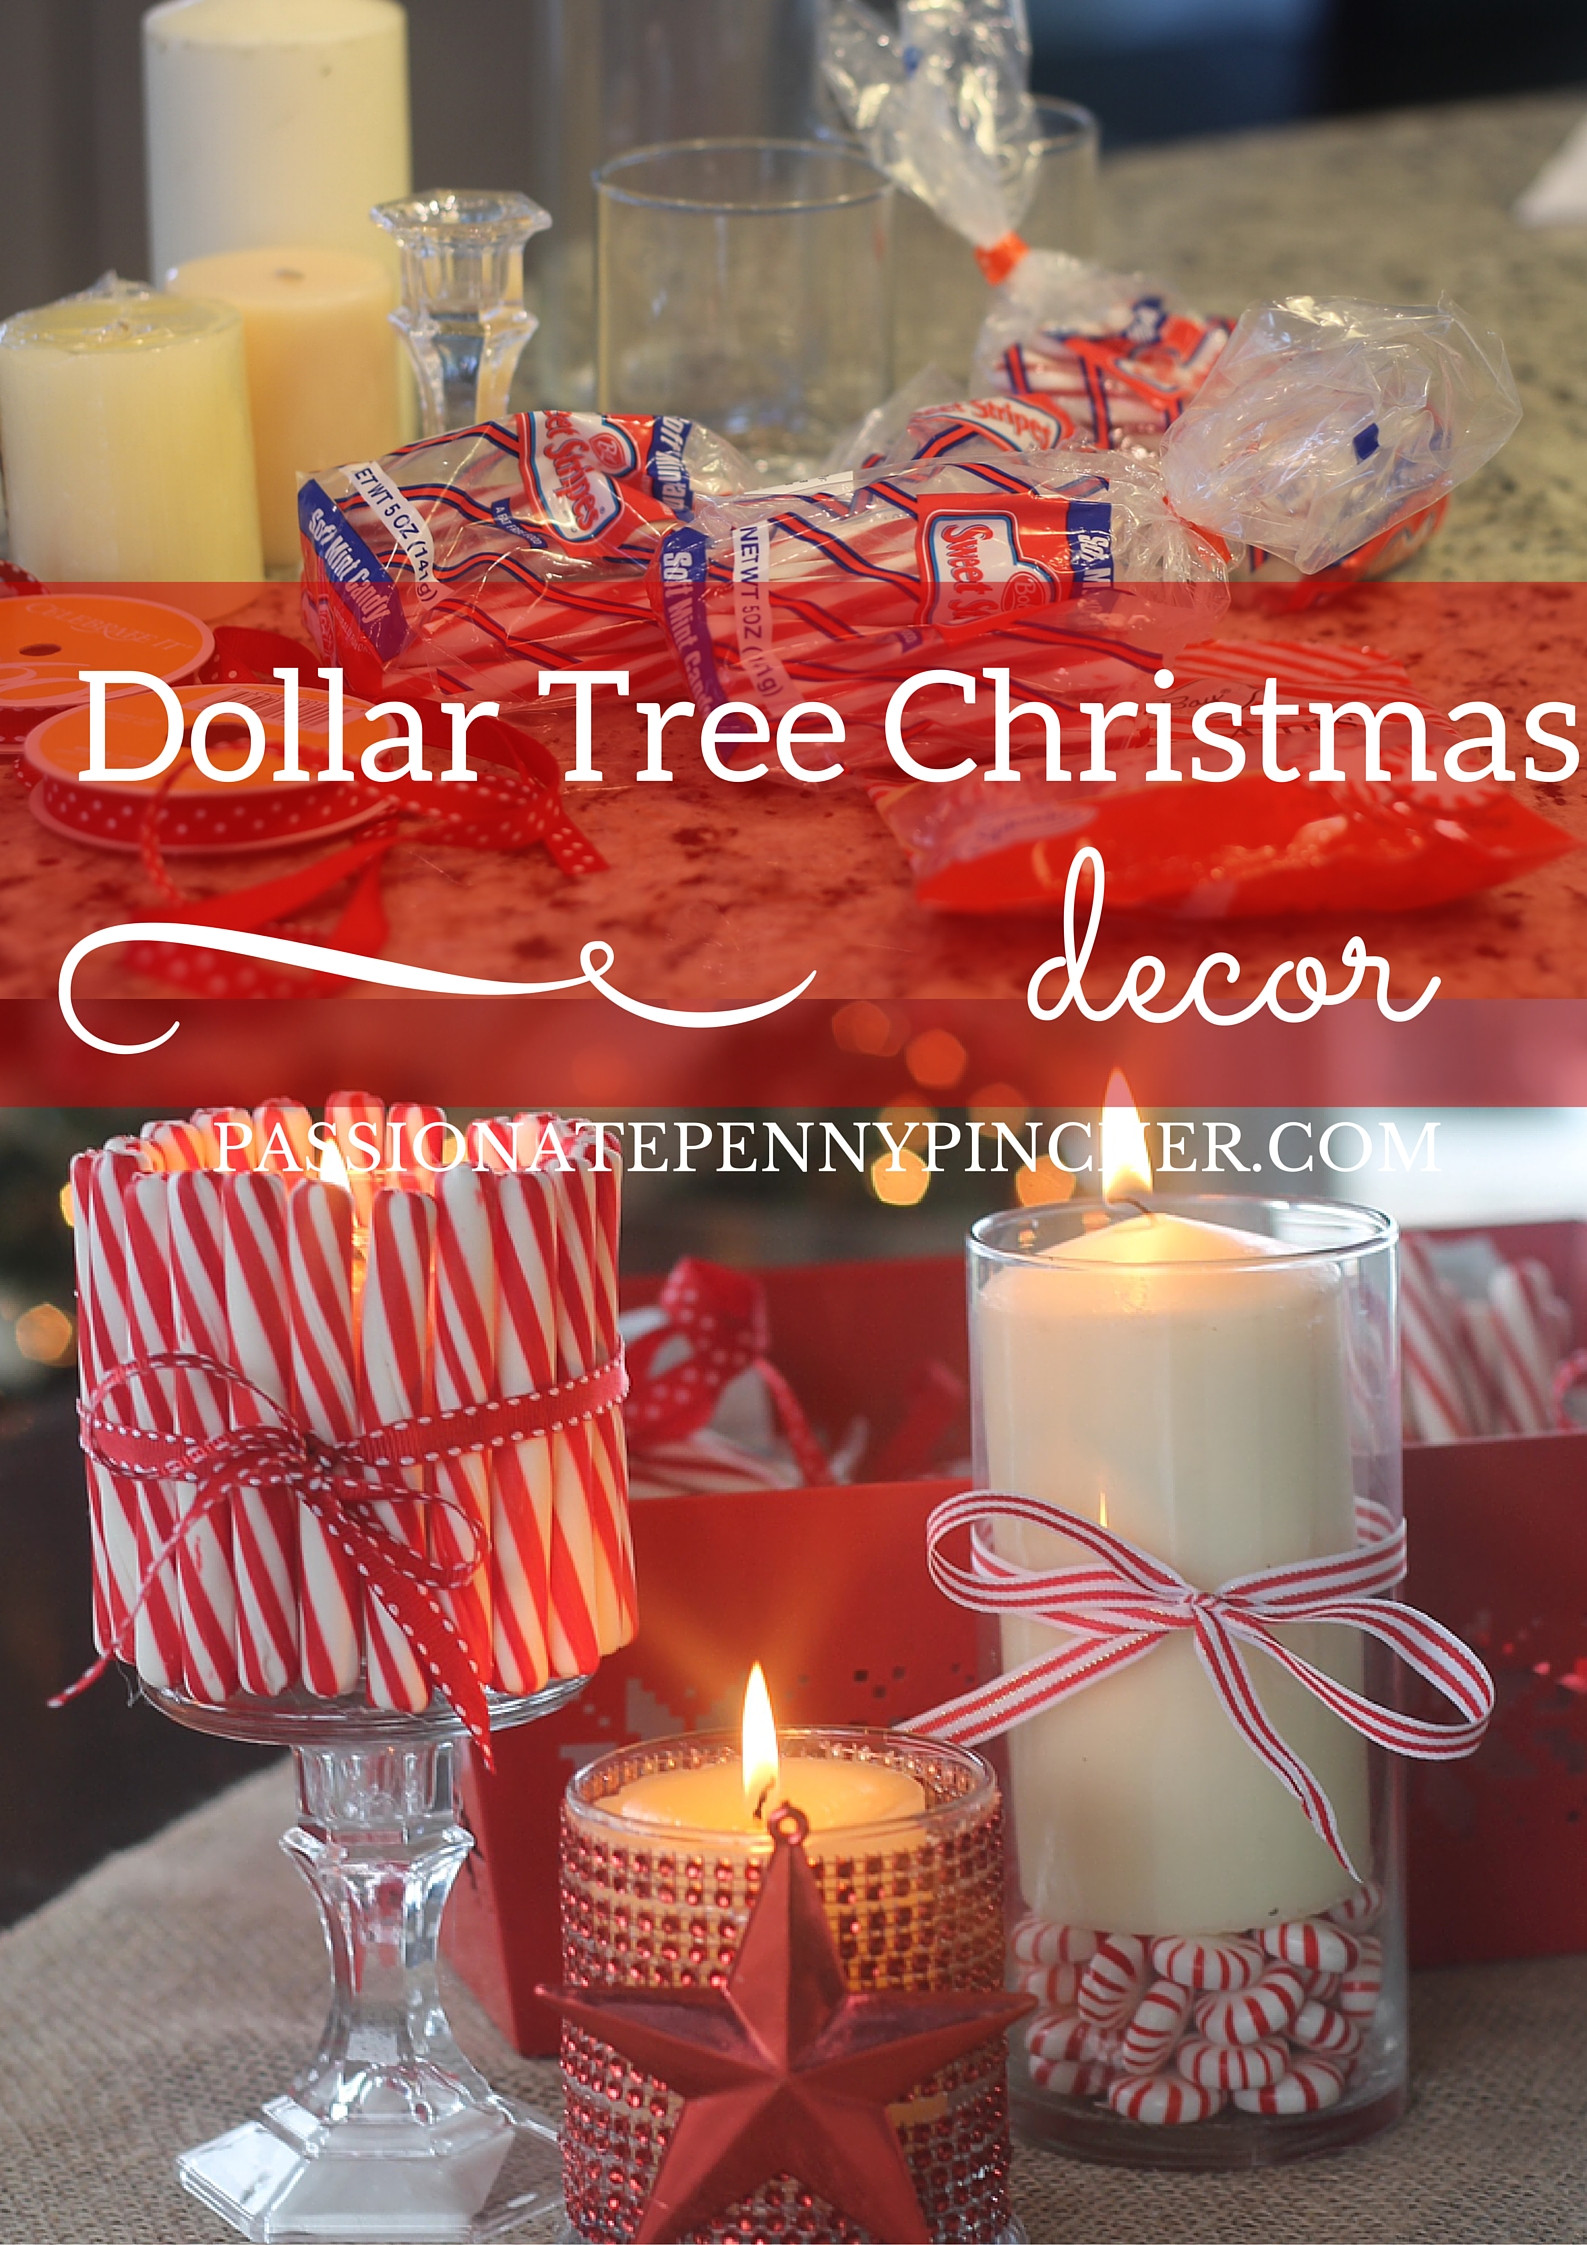 Dollar Tree Christmas Gift Ideas
 Friday Fluff Up Christmas Decorating at the Dollar Tree